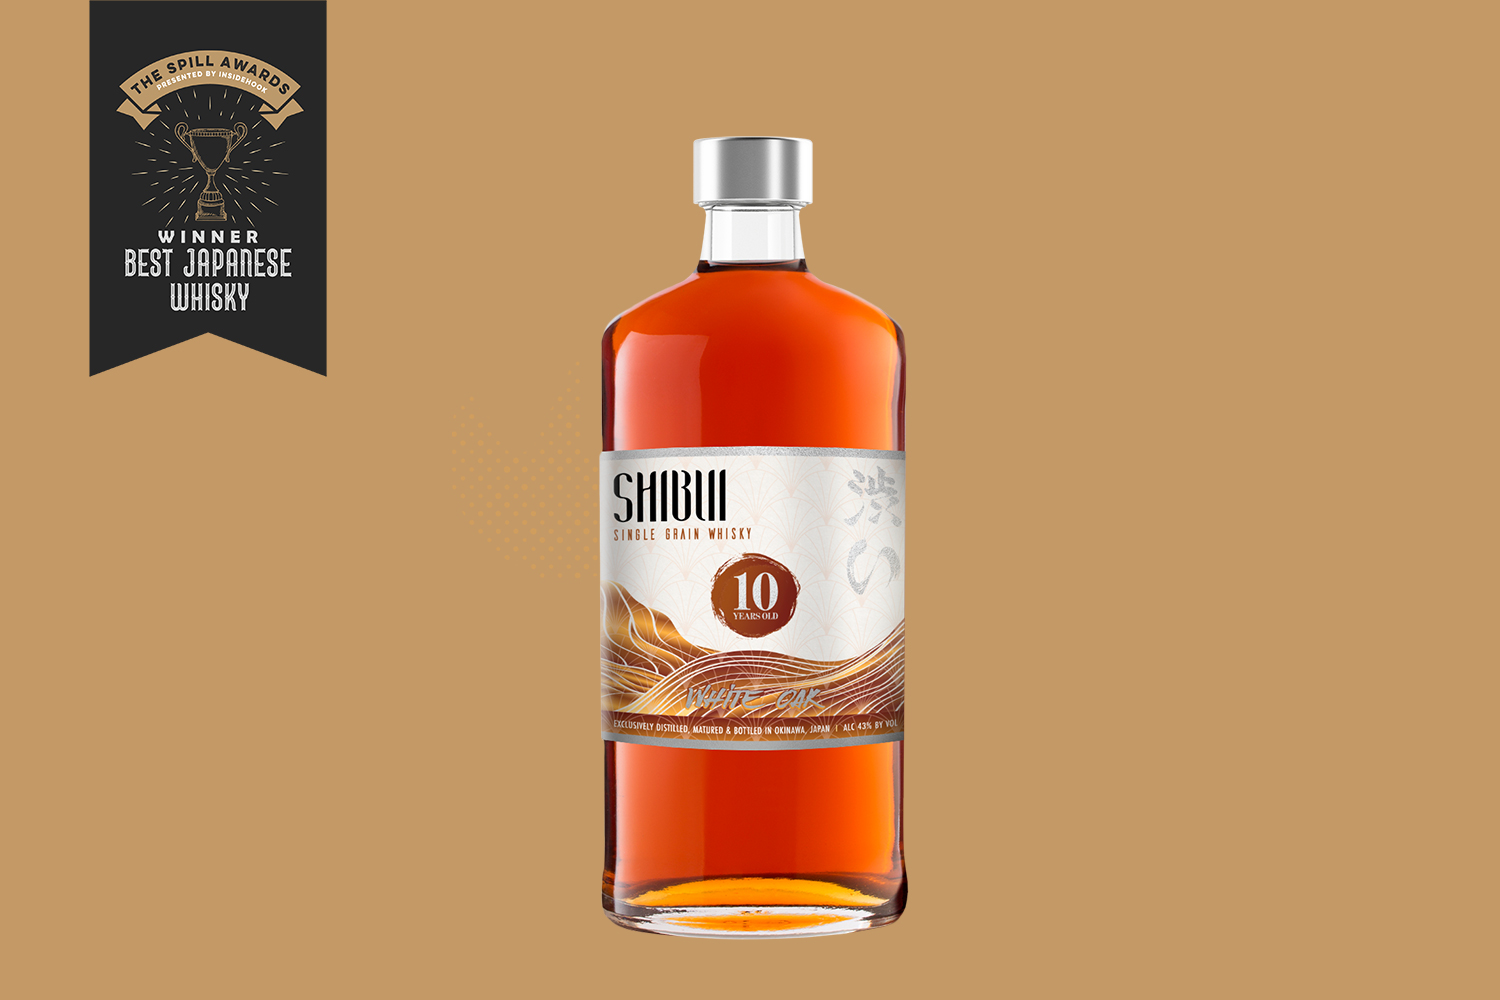 Shibui Single Grain Whisky 10 Years Old